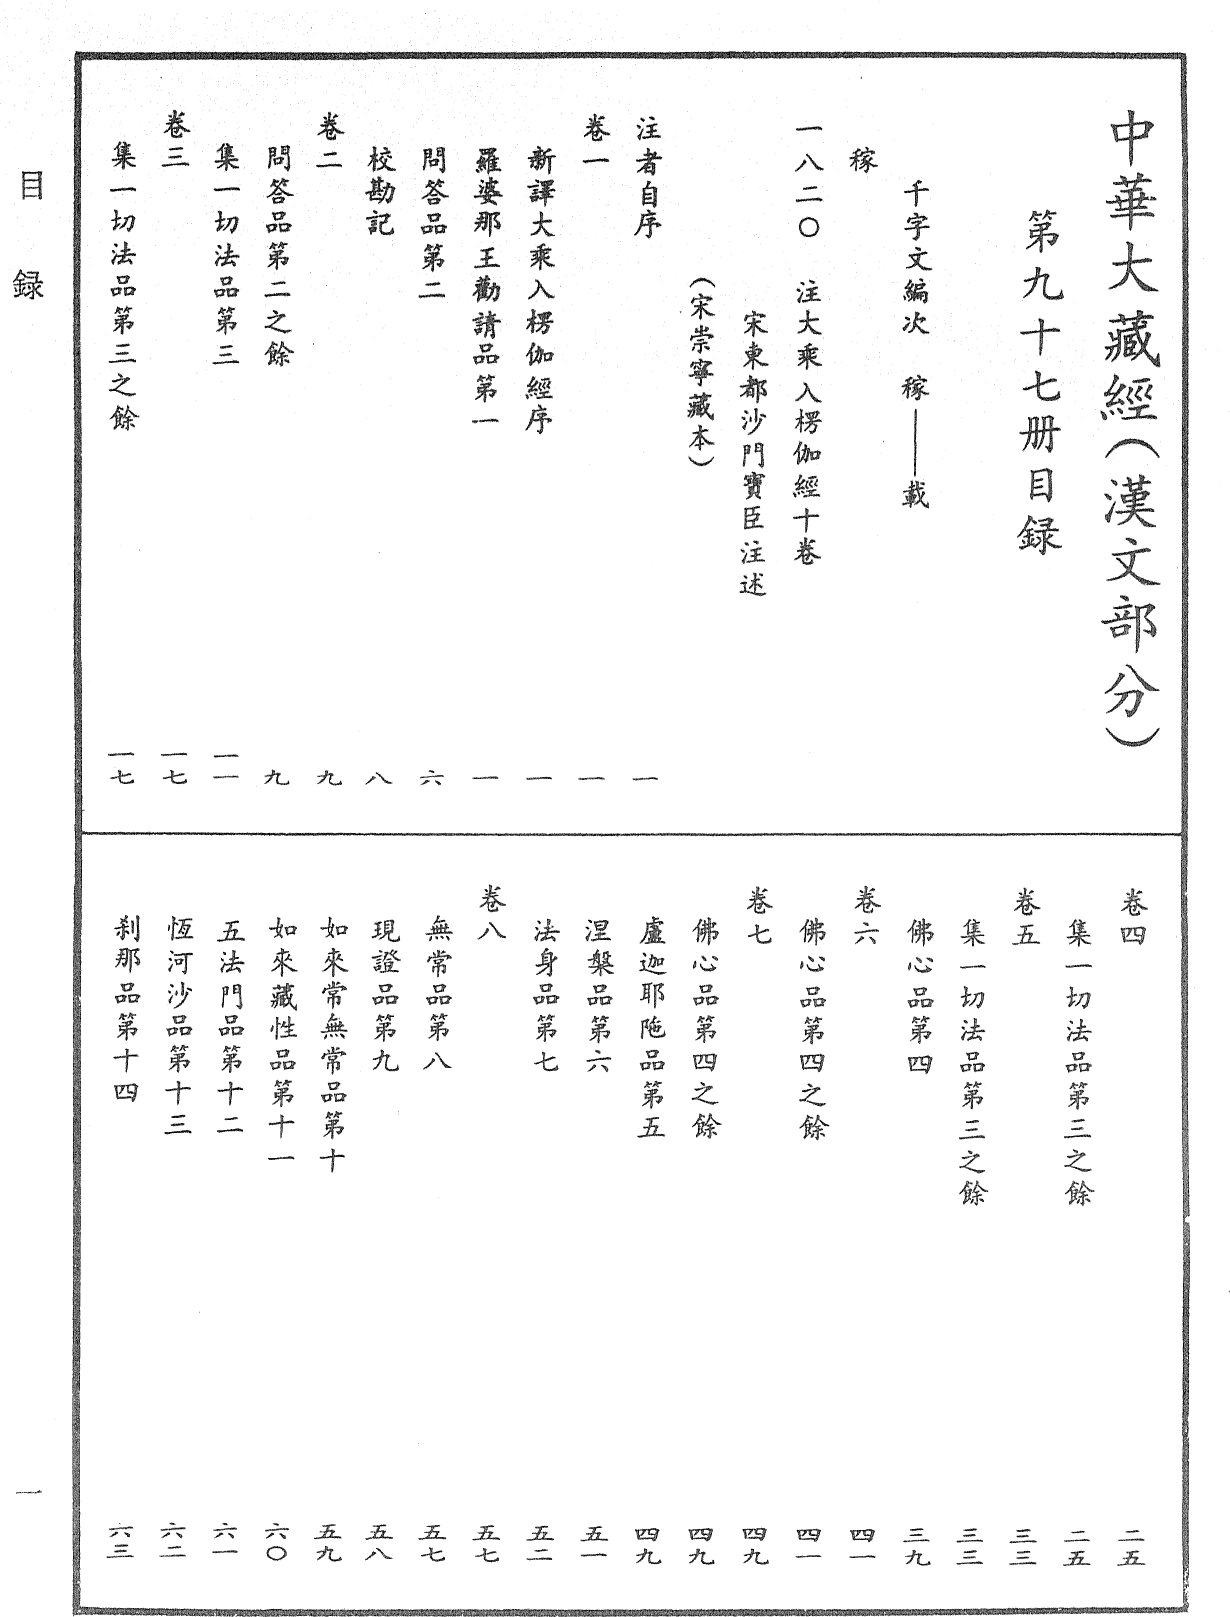 File:《中華大藏經》 第97冊 目録 (1).png